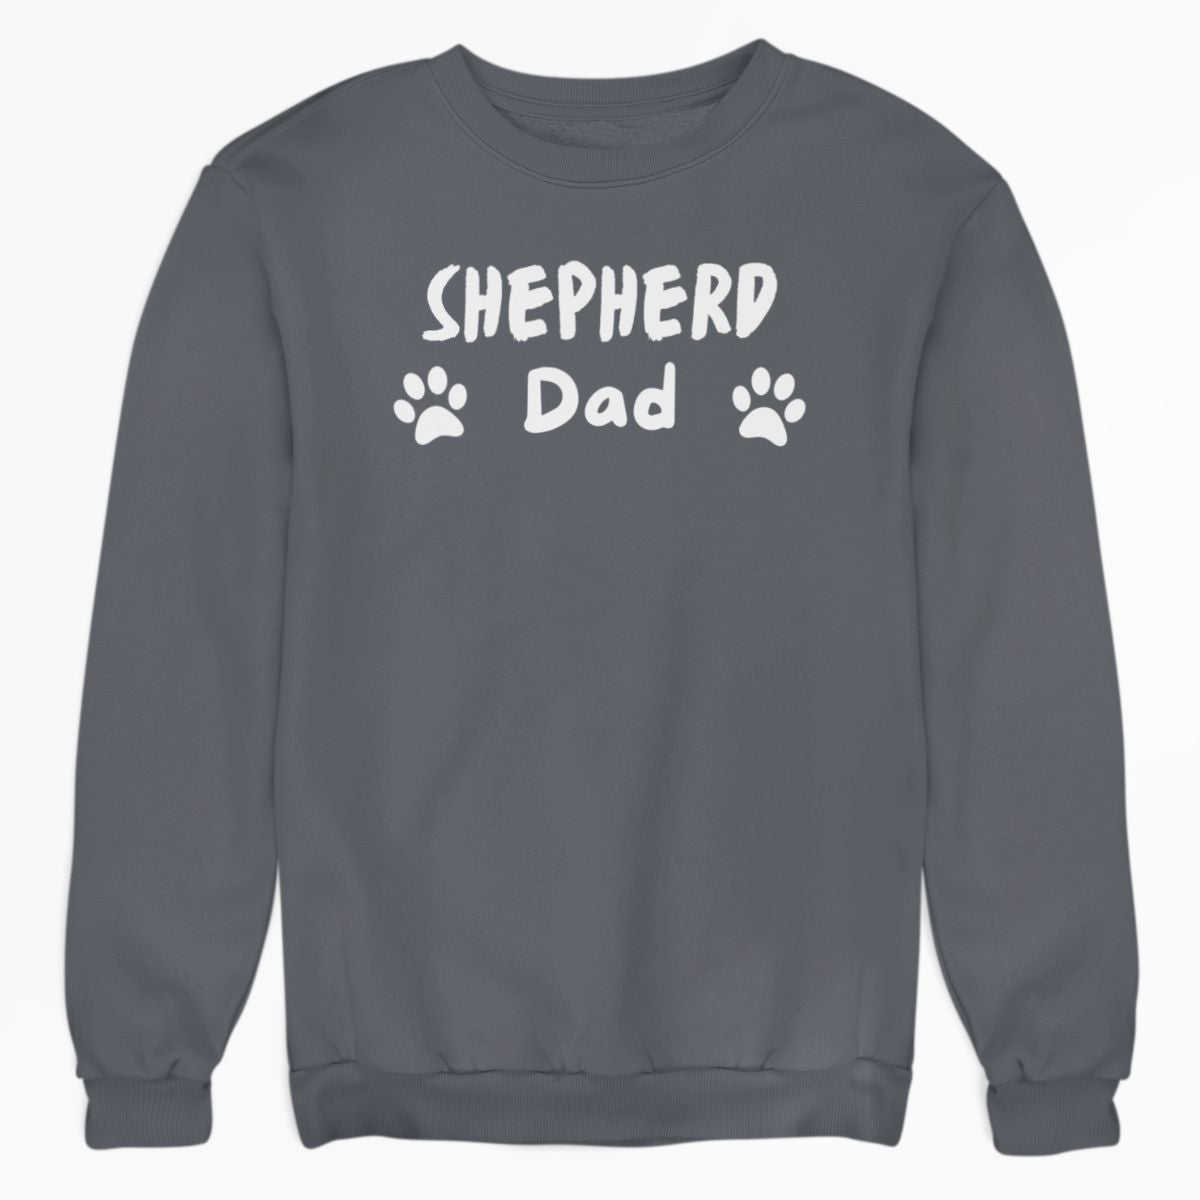 Shepherd Dad Shirt